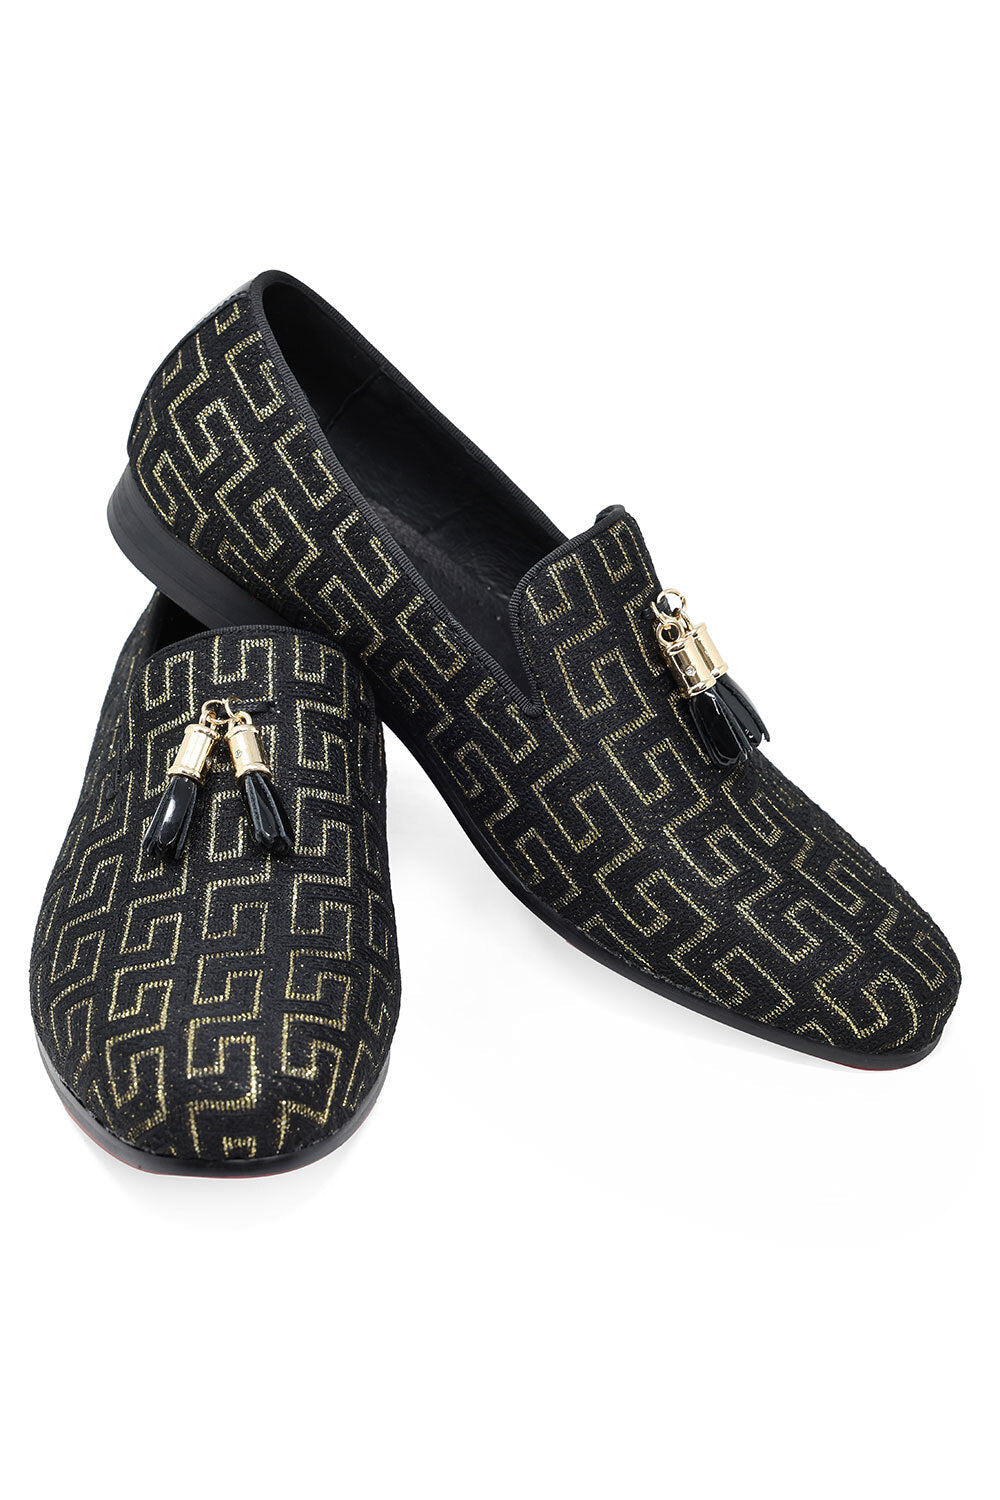 BARABAS Men's Rhinestone Greek key Pattern Tassel Loafer Shoes SH3087 Black Gold